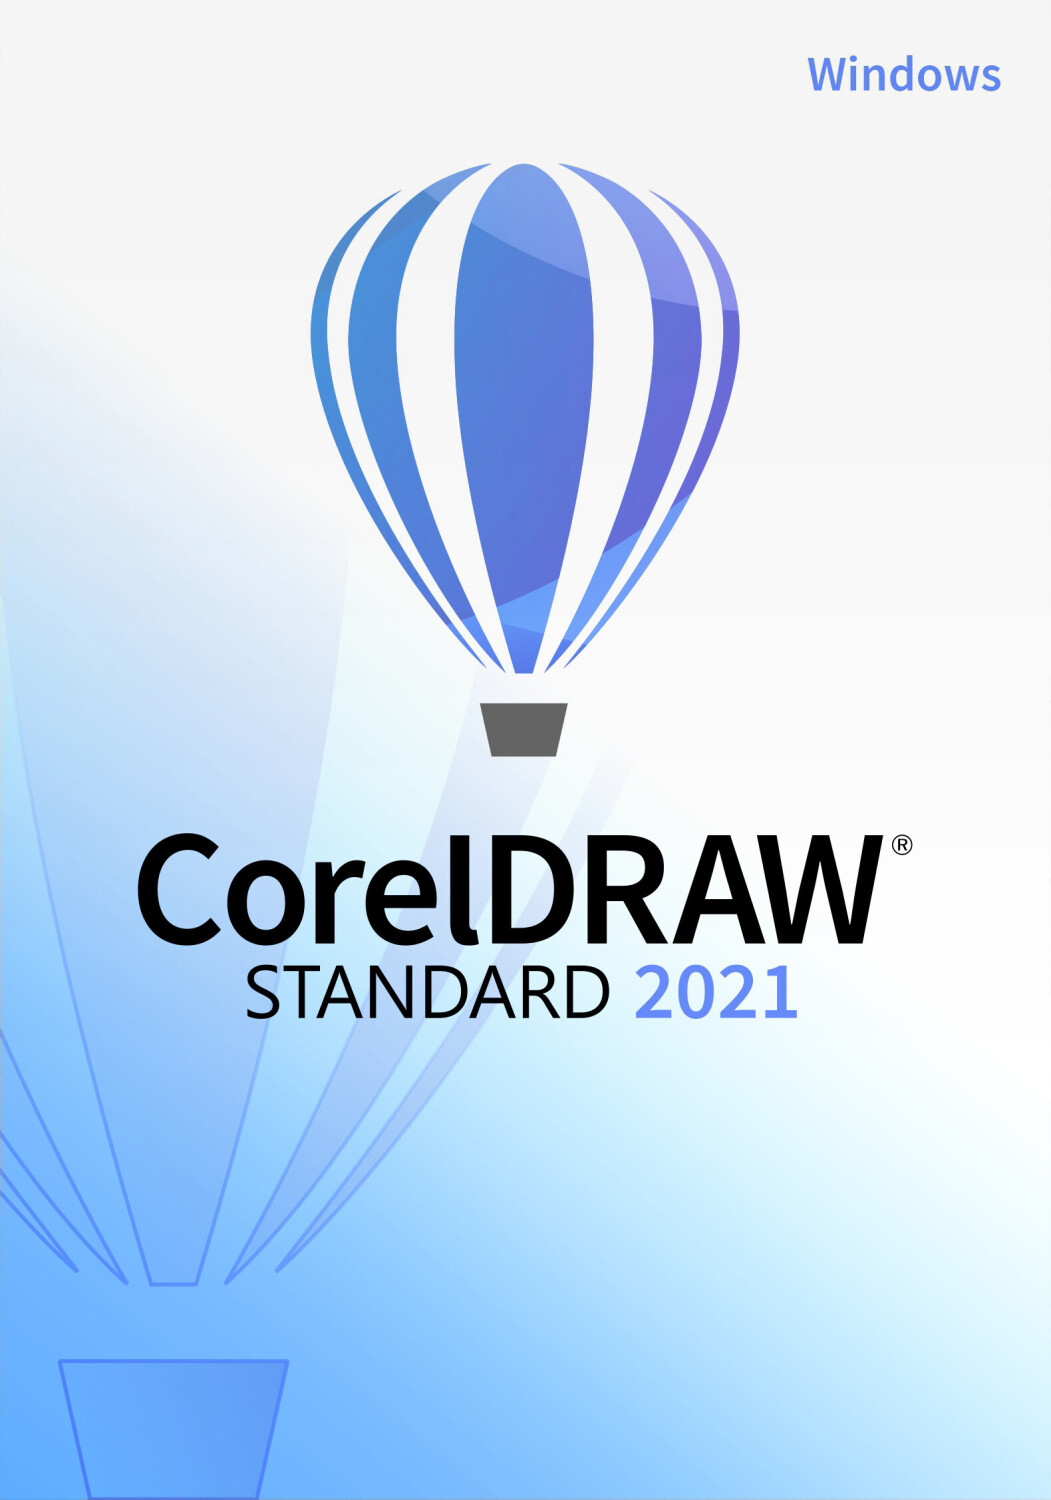 coreldraw 2021 google drive